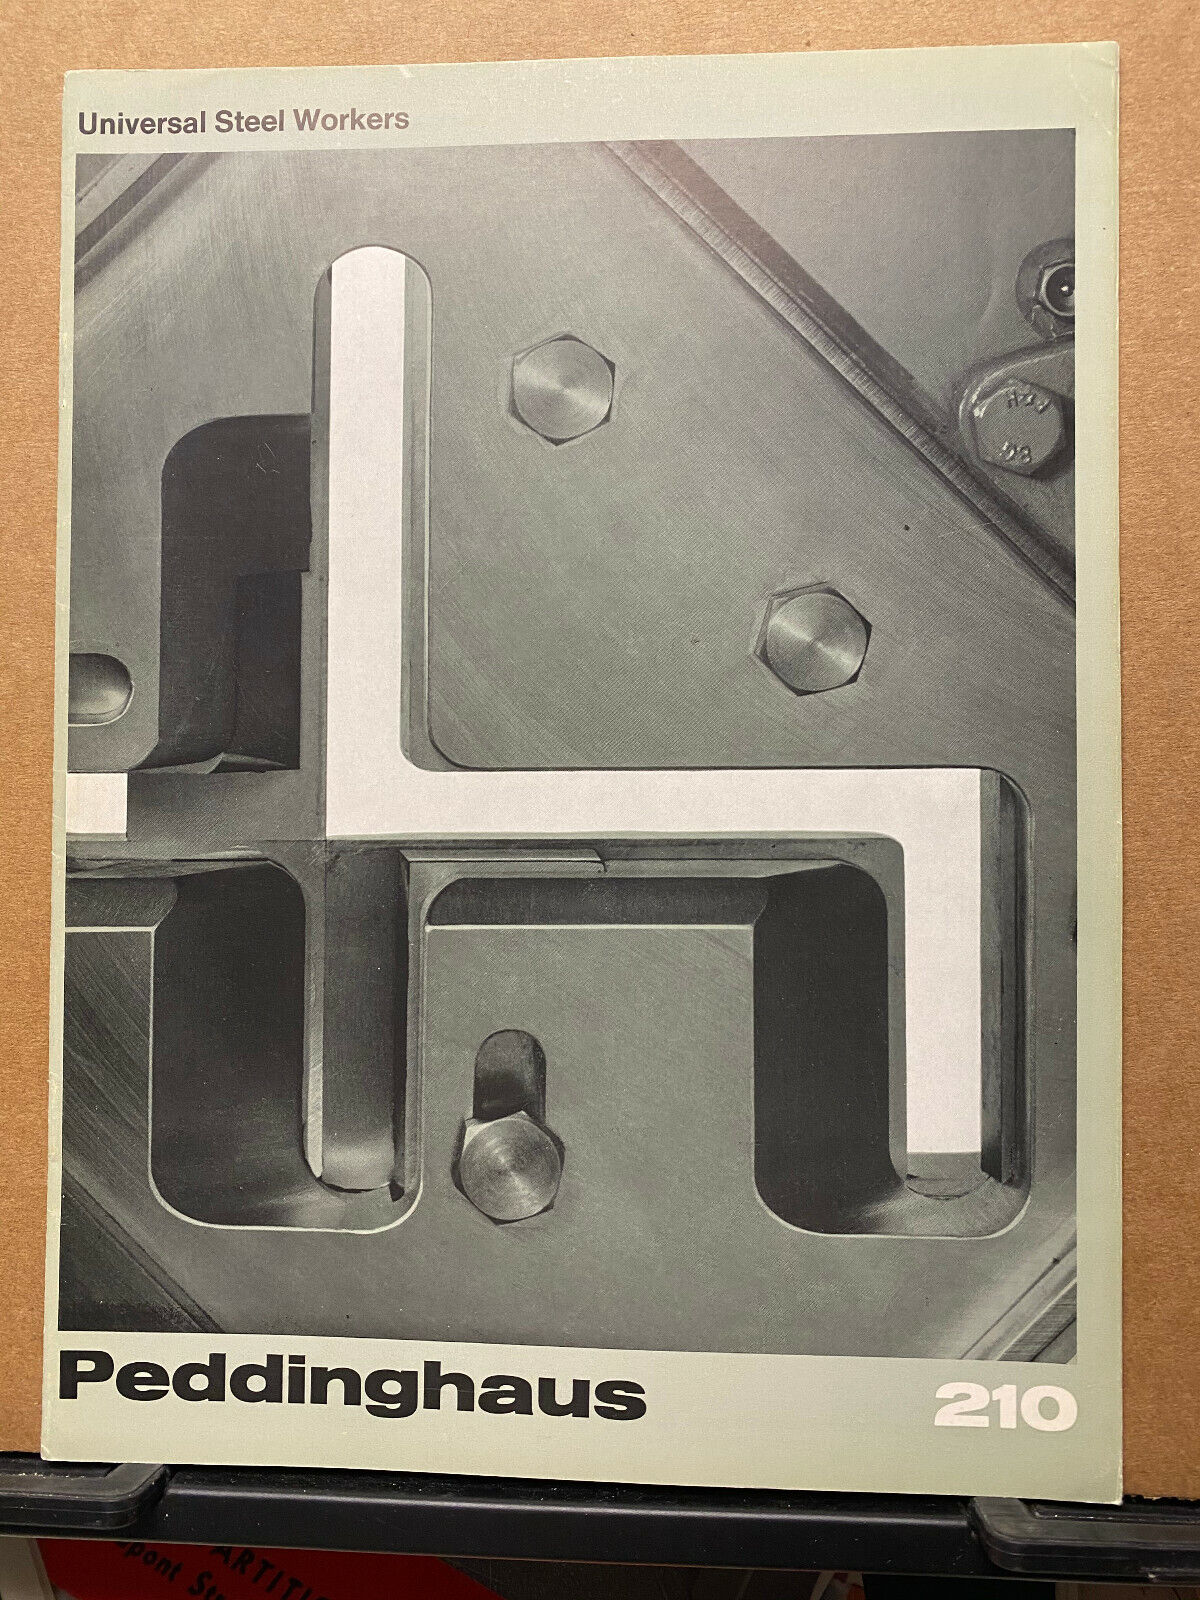 Vtg Peddinghaus Catalog 210 Universal Steel Workers Machine Tools 1968 Brochure